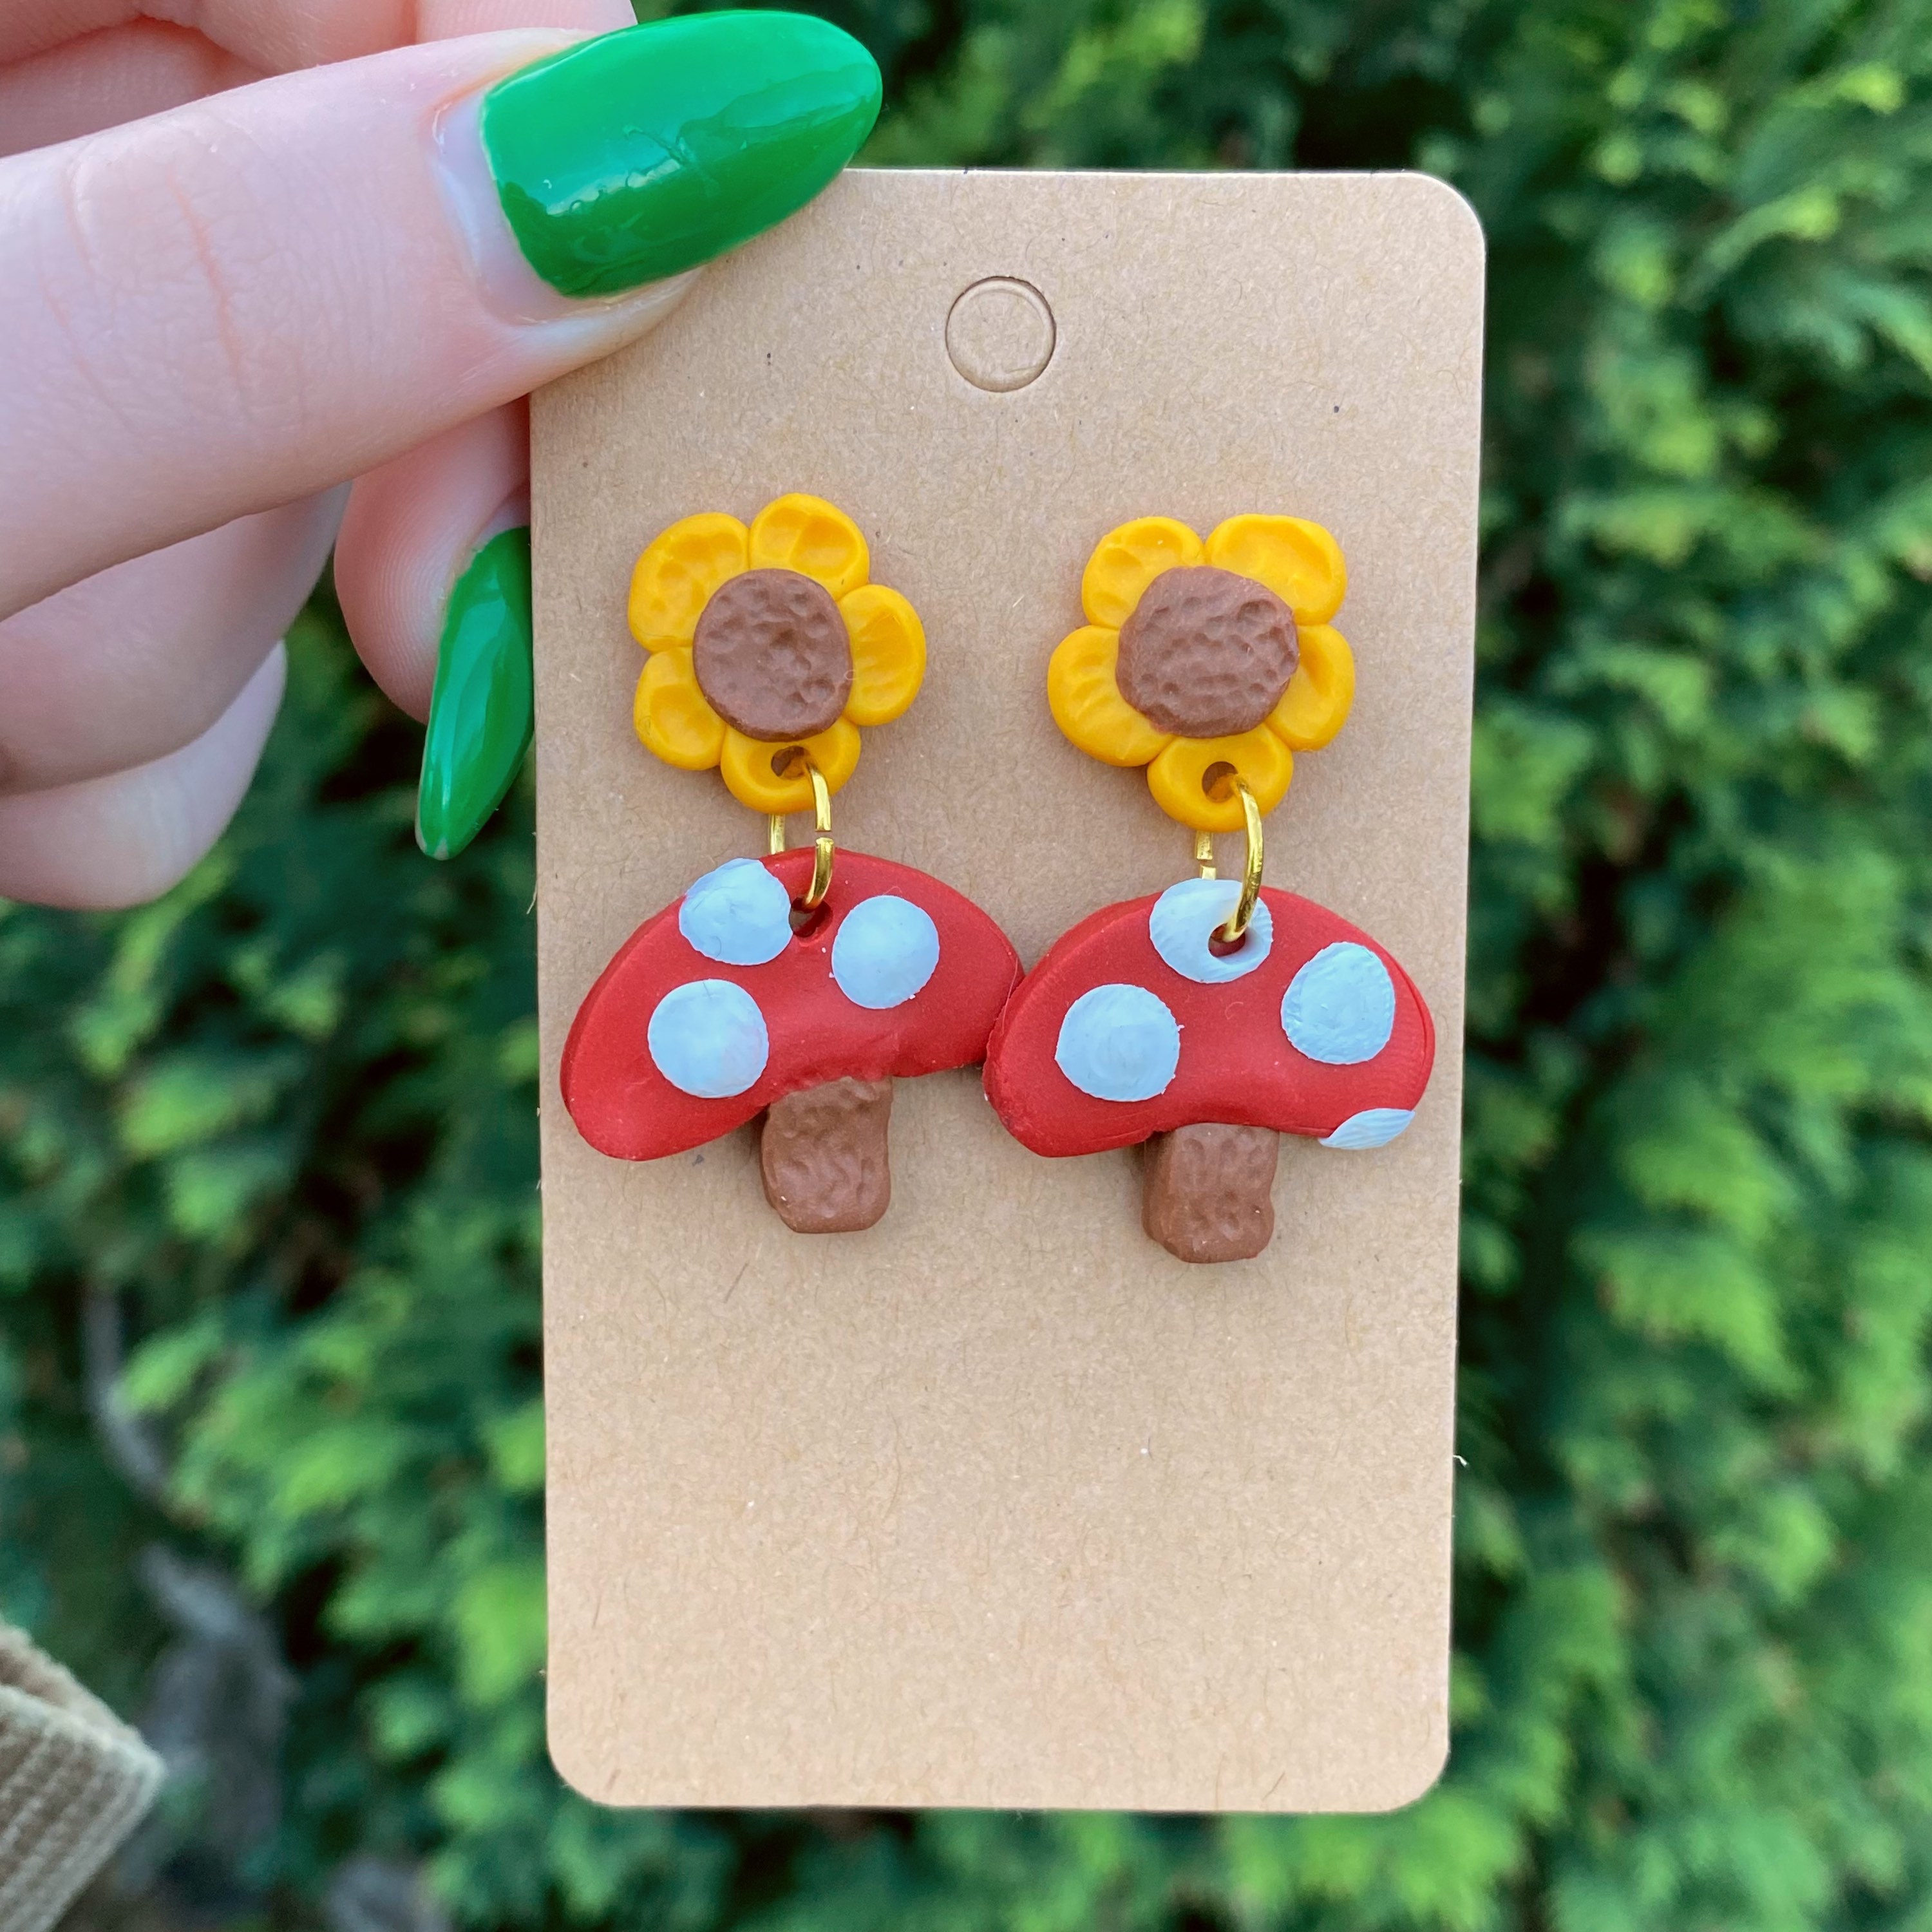 Handmade Funky Polymer Clay Mushroom Earrings | Aesthetic Earrings |  Valentine's Day Gift | Cottagecore Earrings | Fairycore Jewelry 